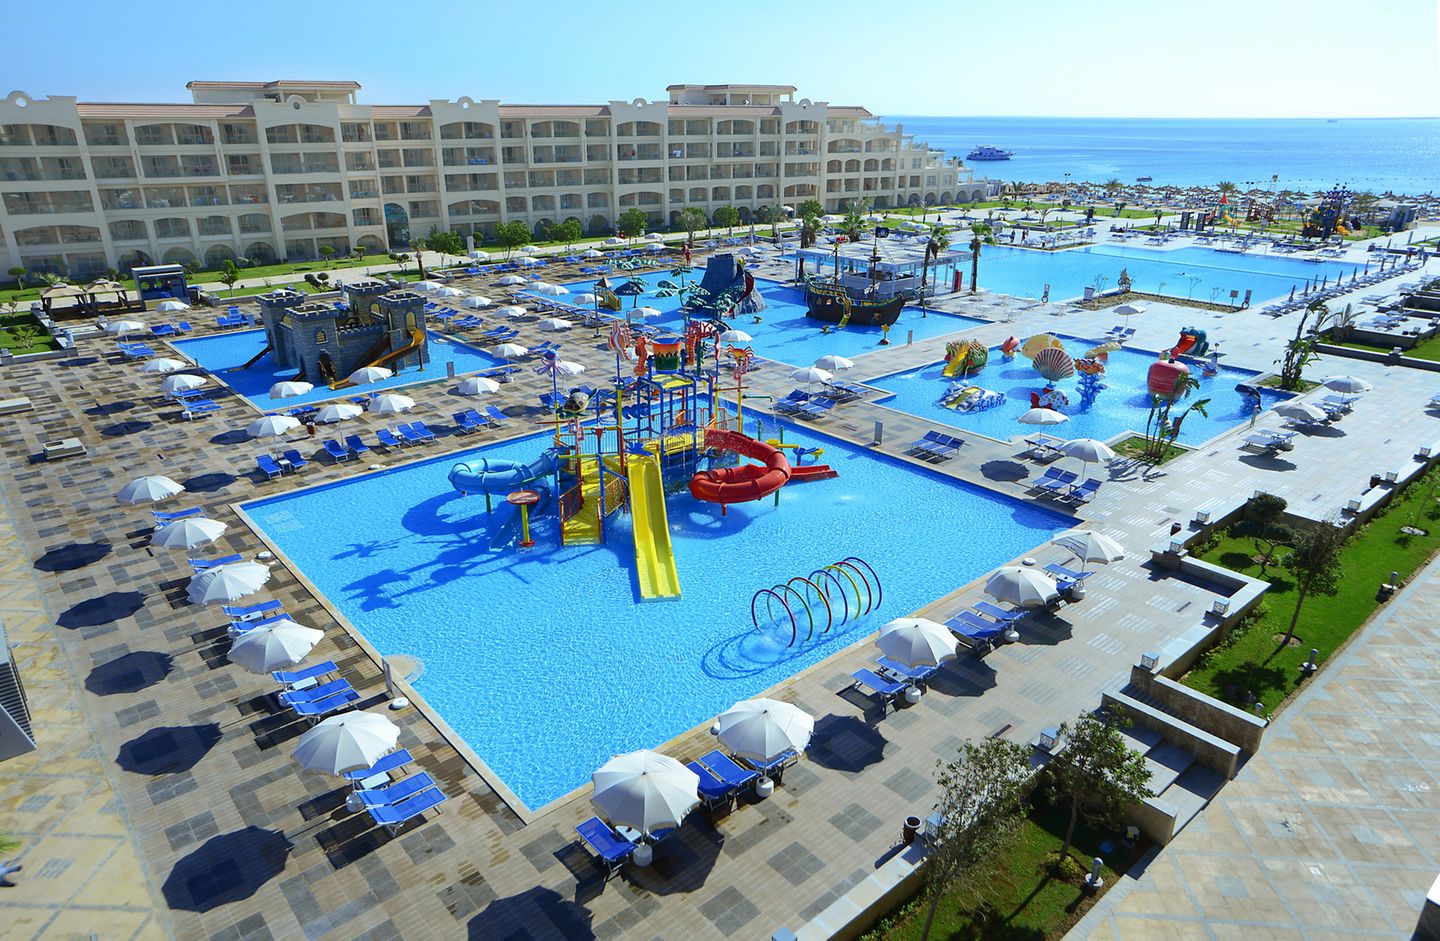 Beliebteste Hotels: Hurghada